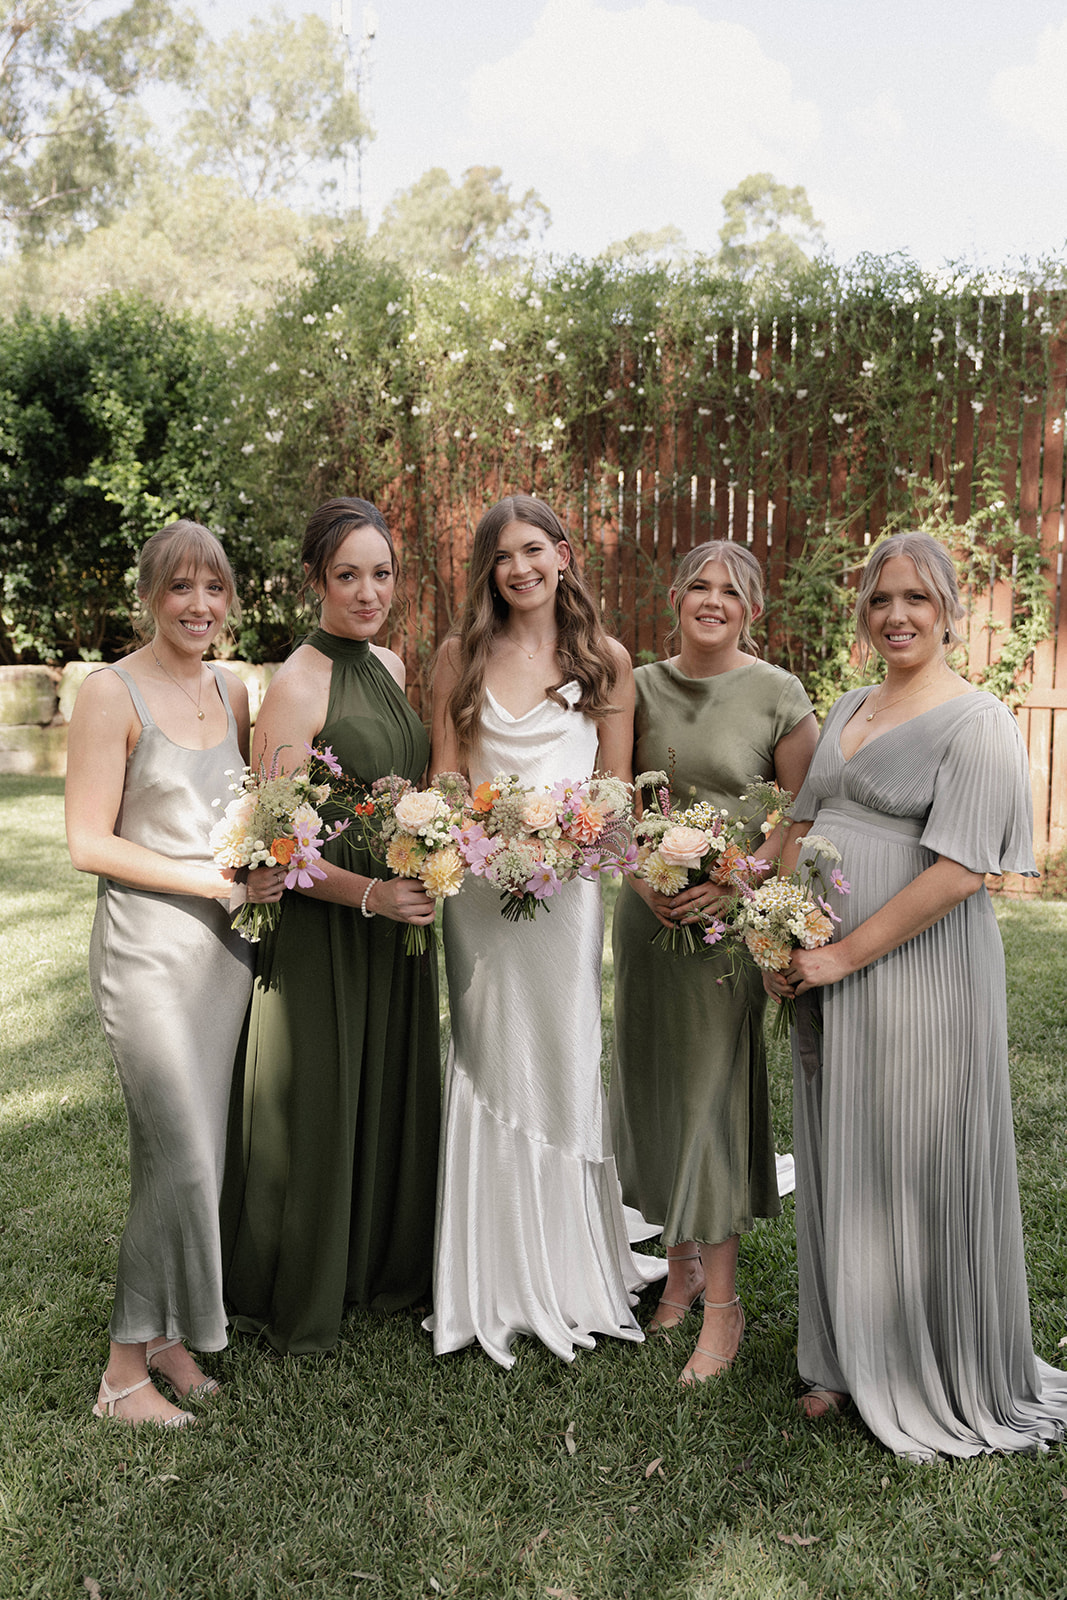 Brisbane editorial backyard wedding photography, Bridesmaids in mixed greens